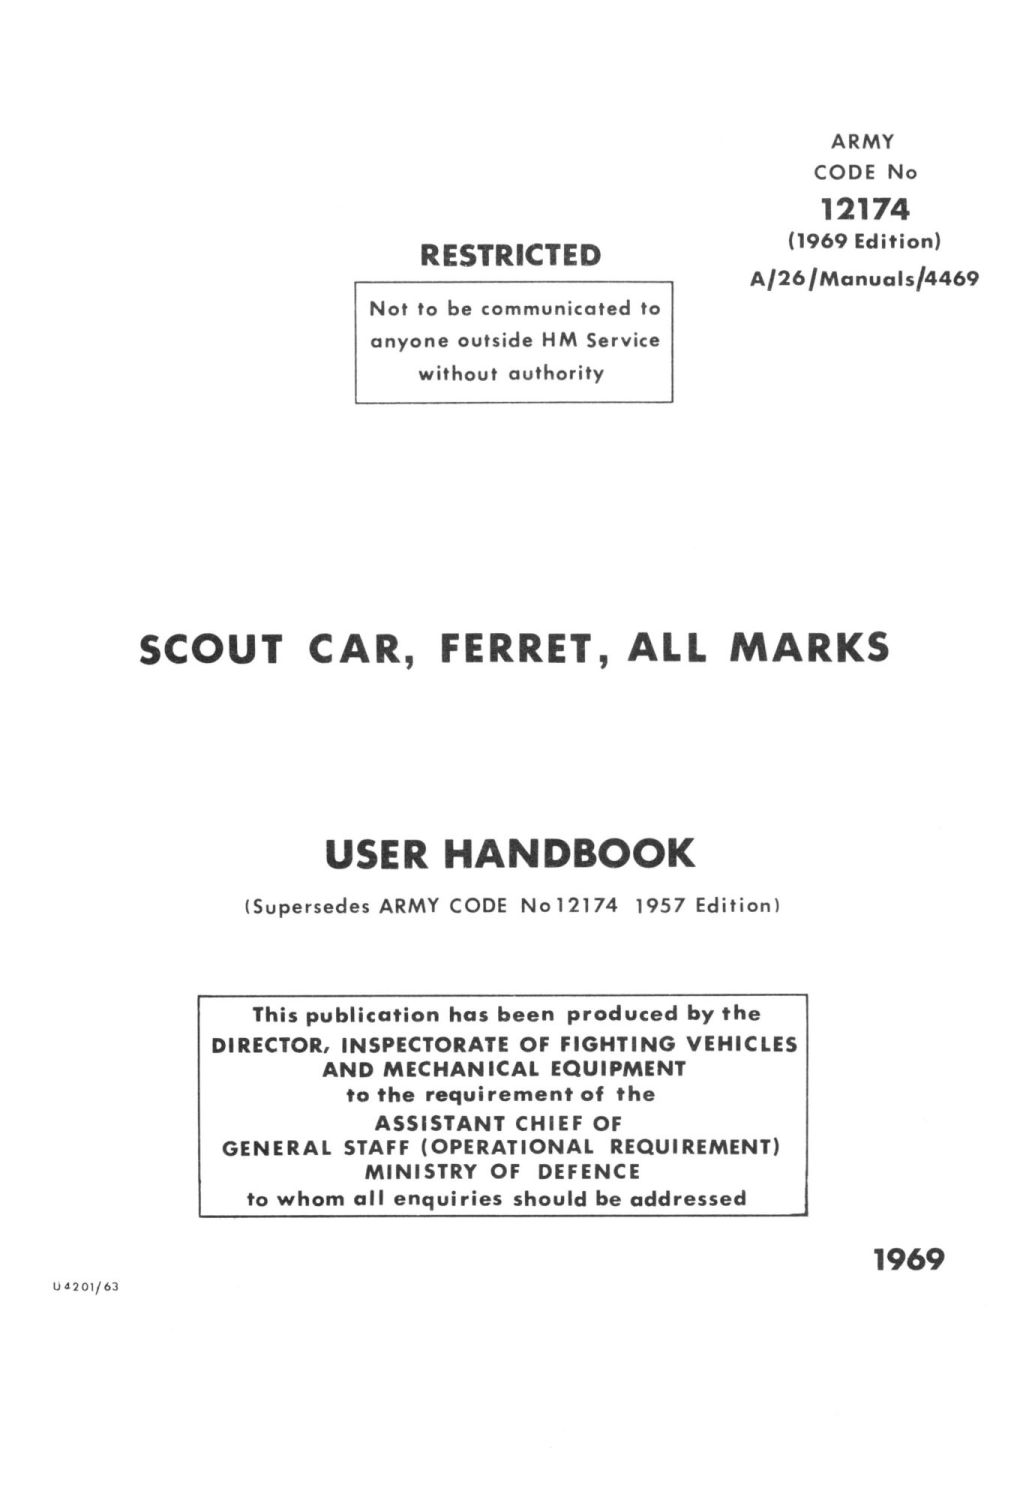 Ferret Scout Car, All Marks, User Handbook